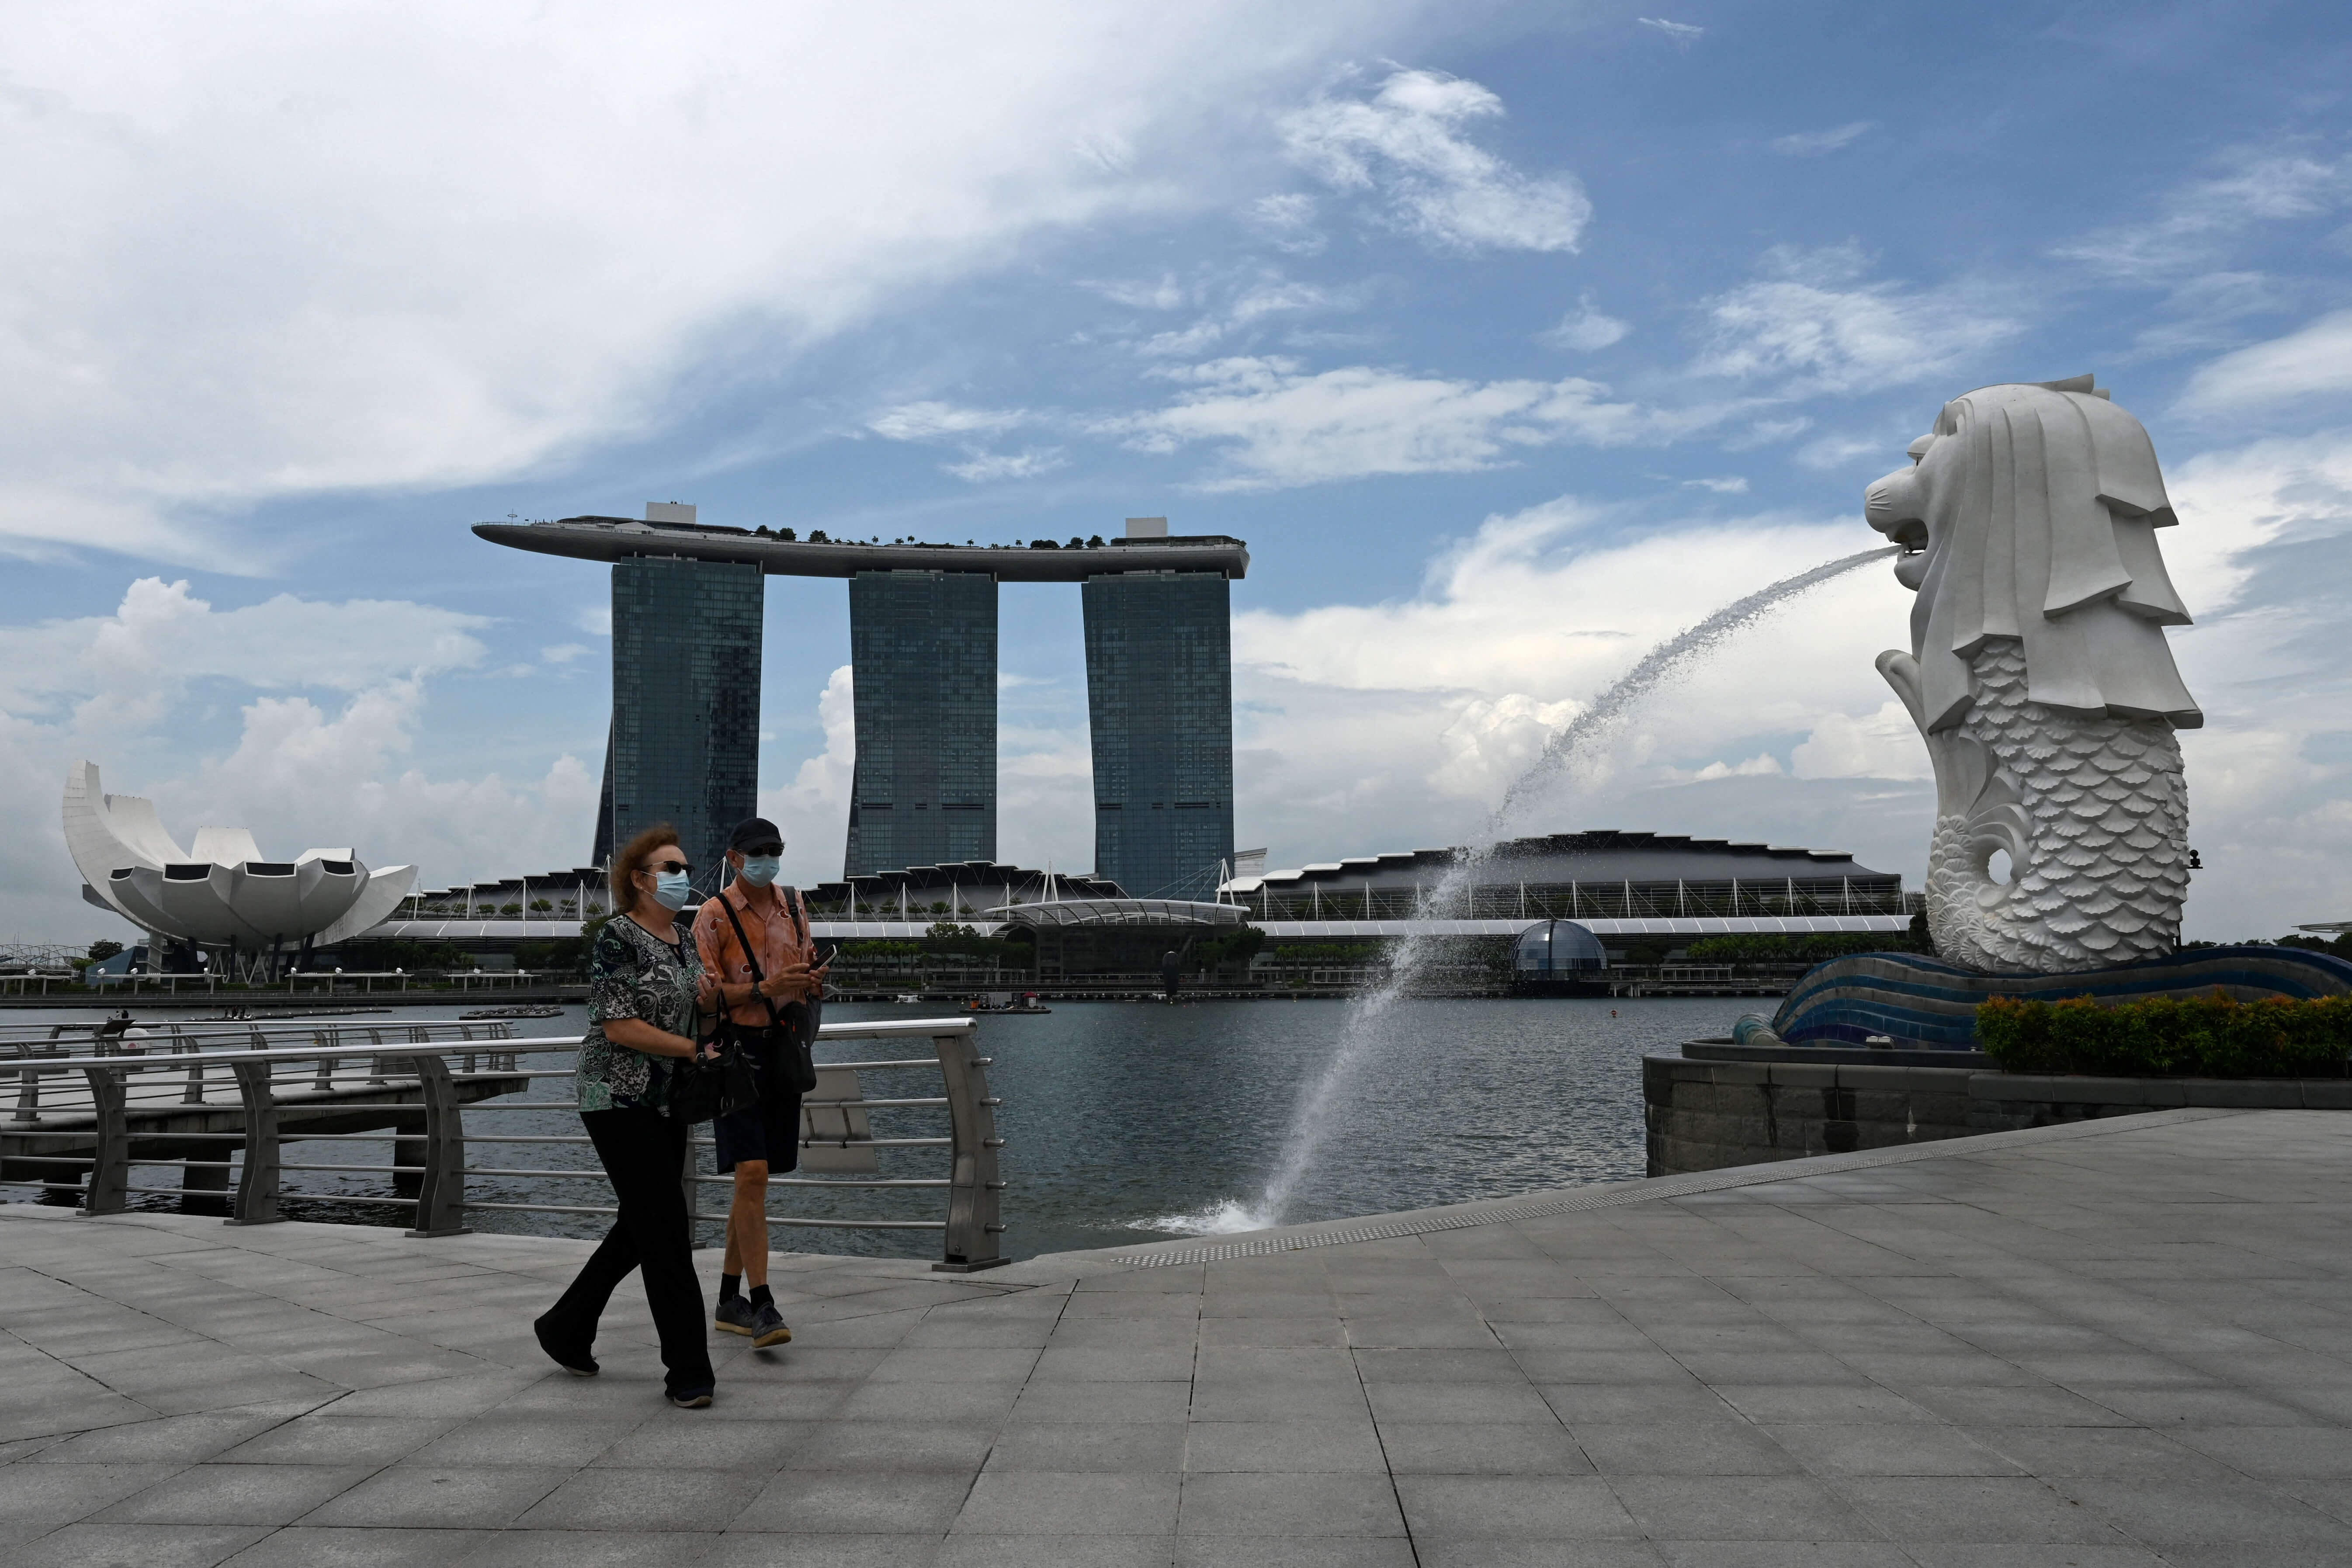 Singapore travel restrictions